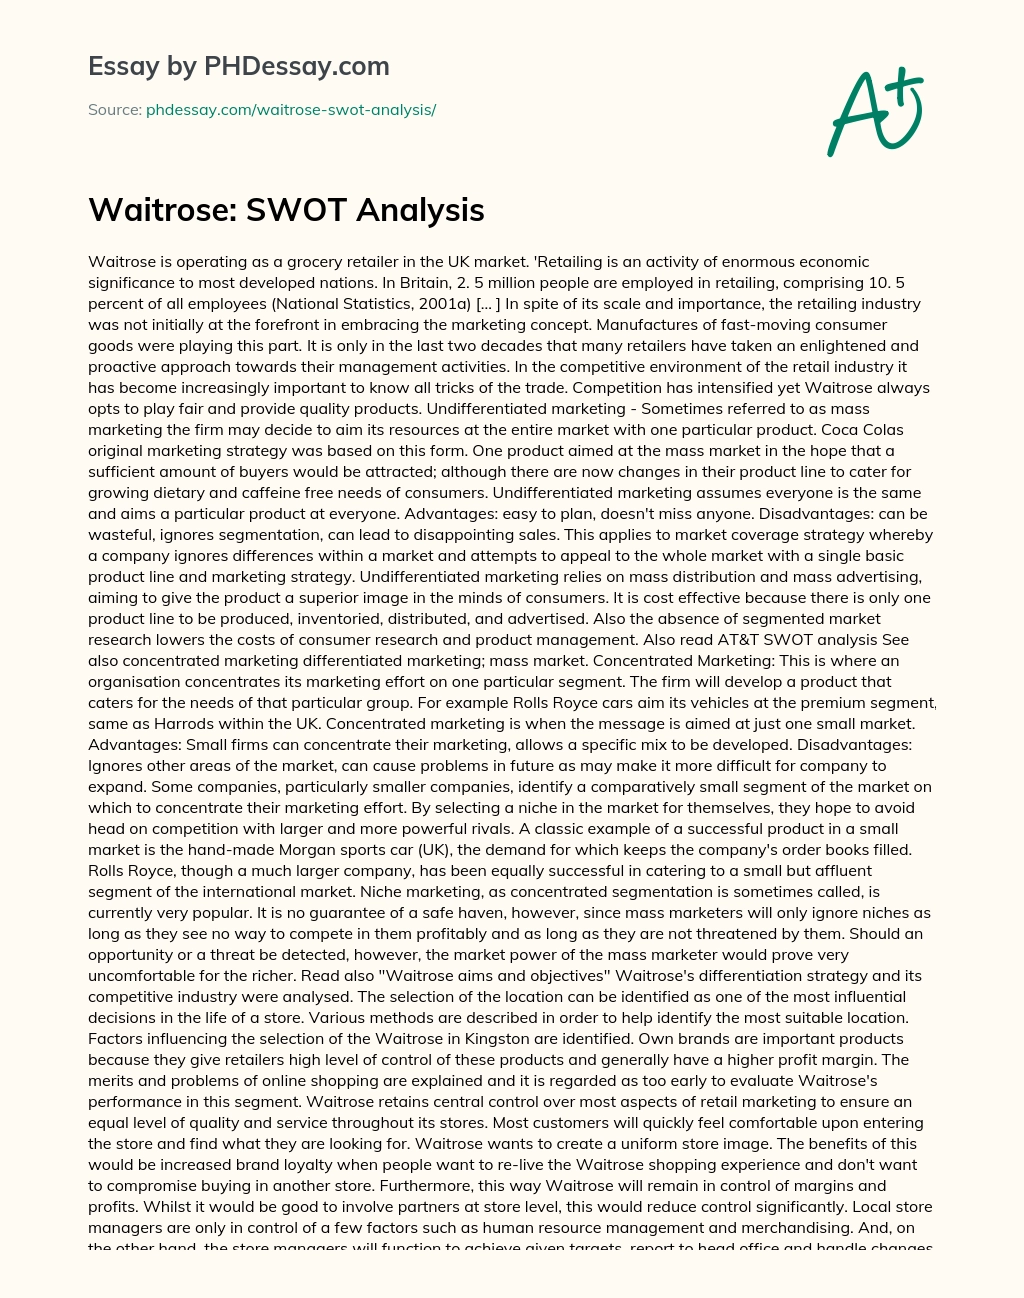 Waitrose: SWOT Analysis essay